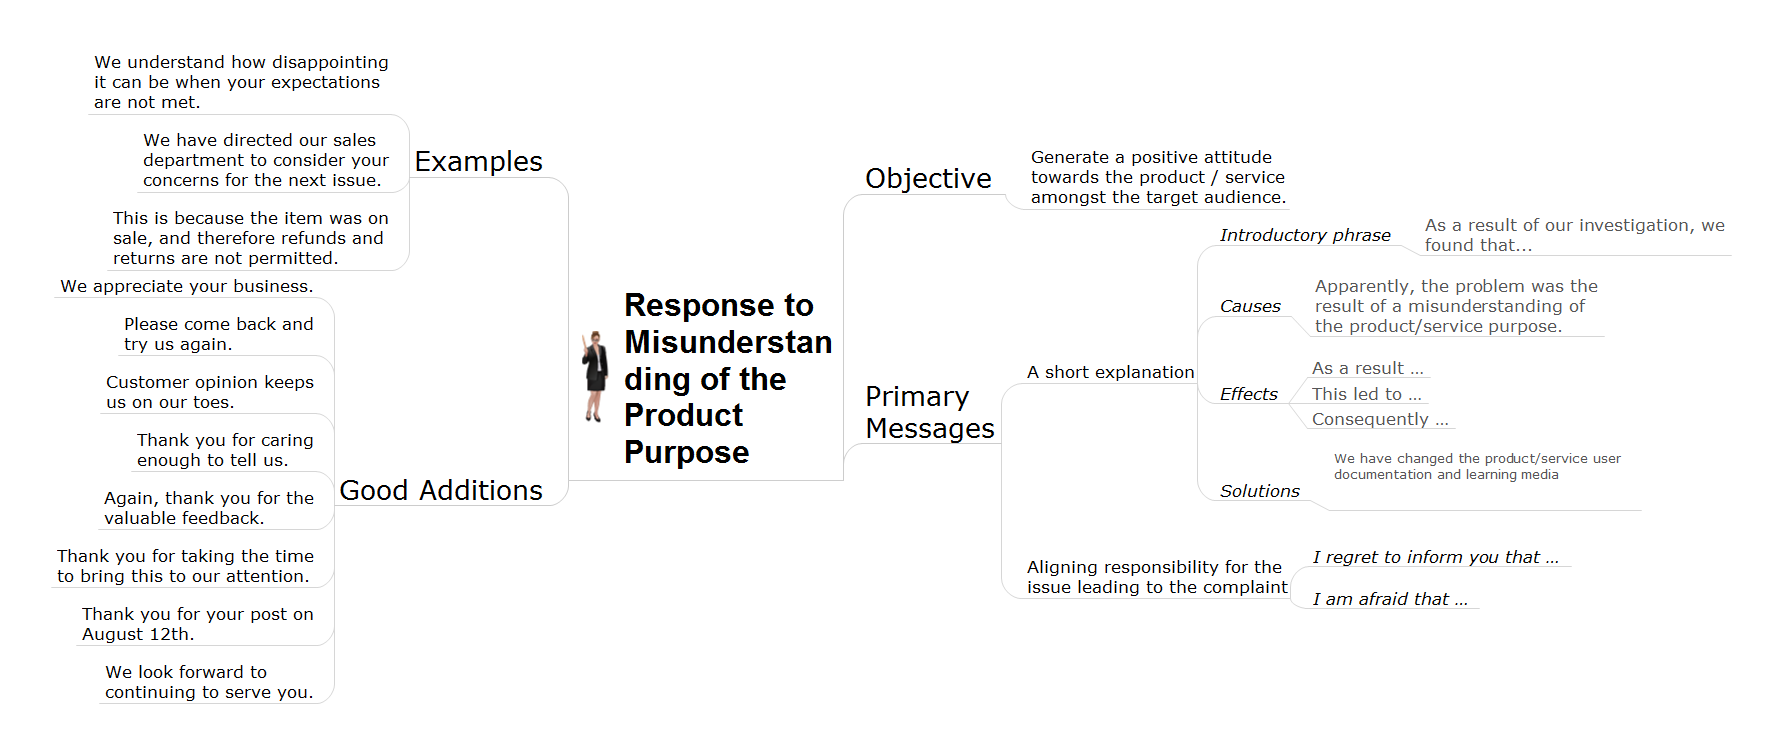 Action mindmap - Misunderstanding product purpose